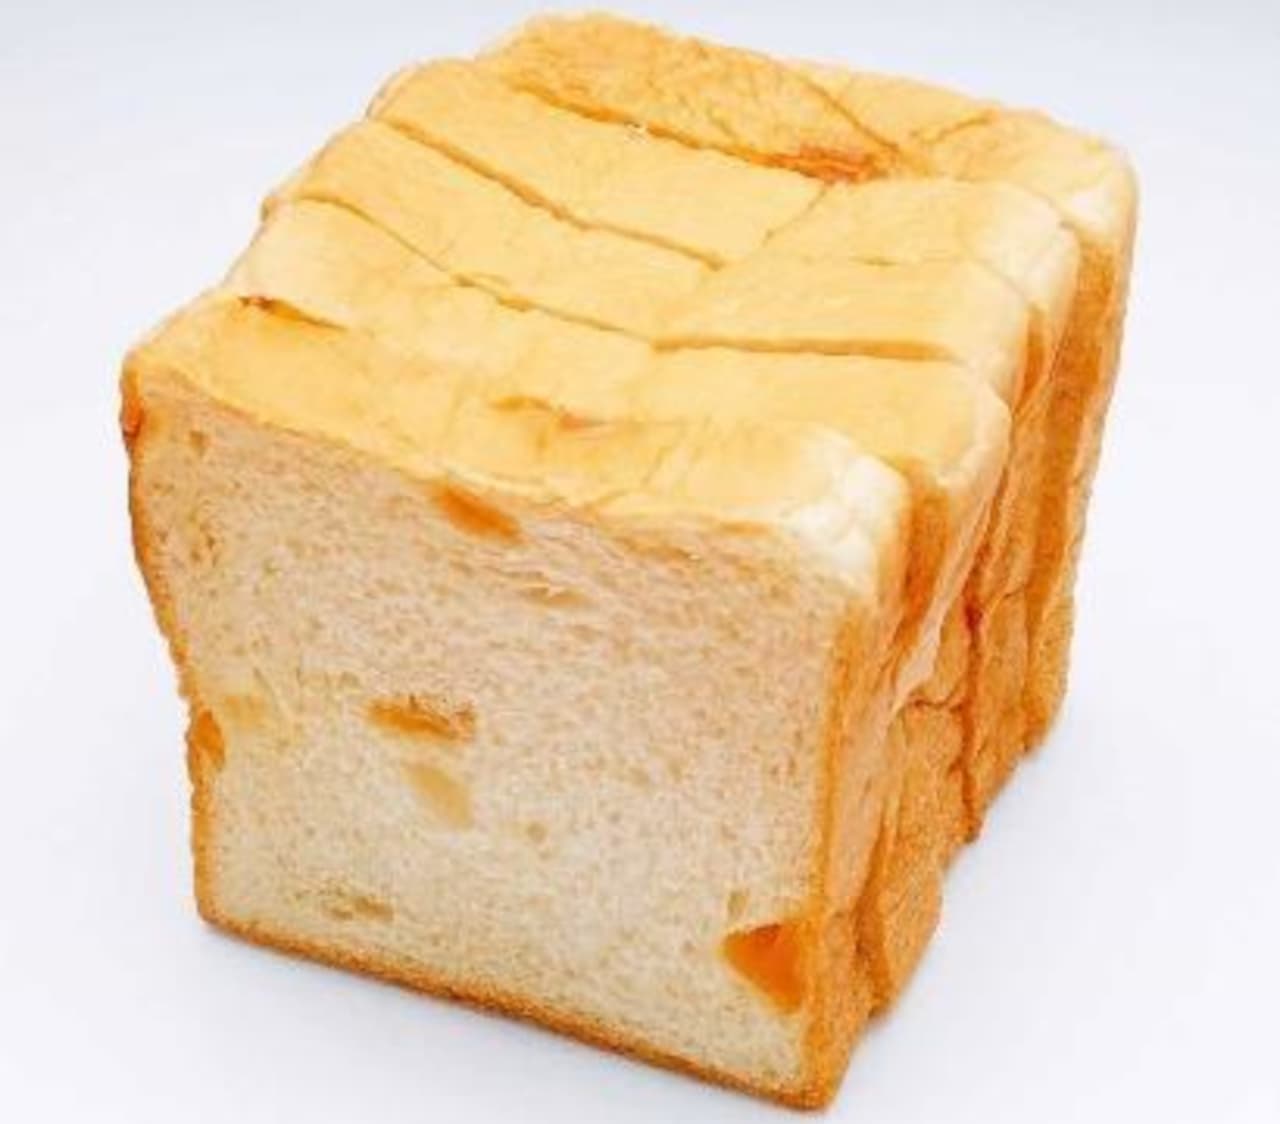 Kimuraya's new bread for August